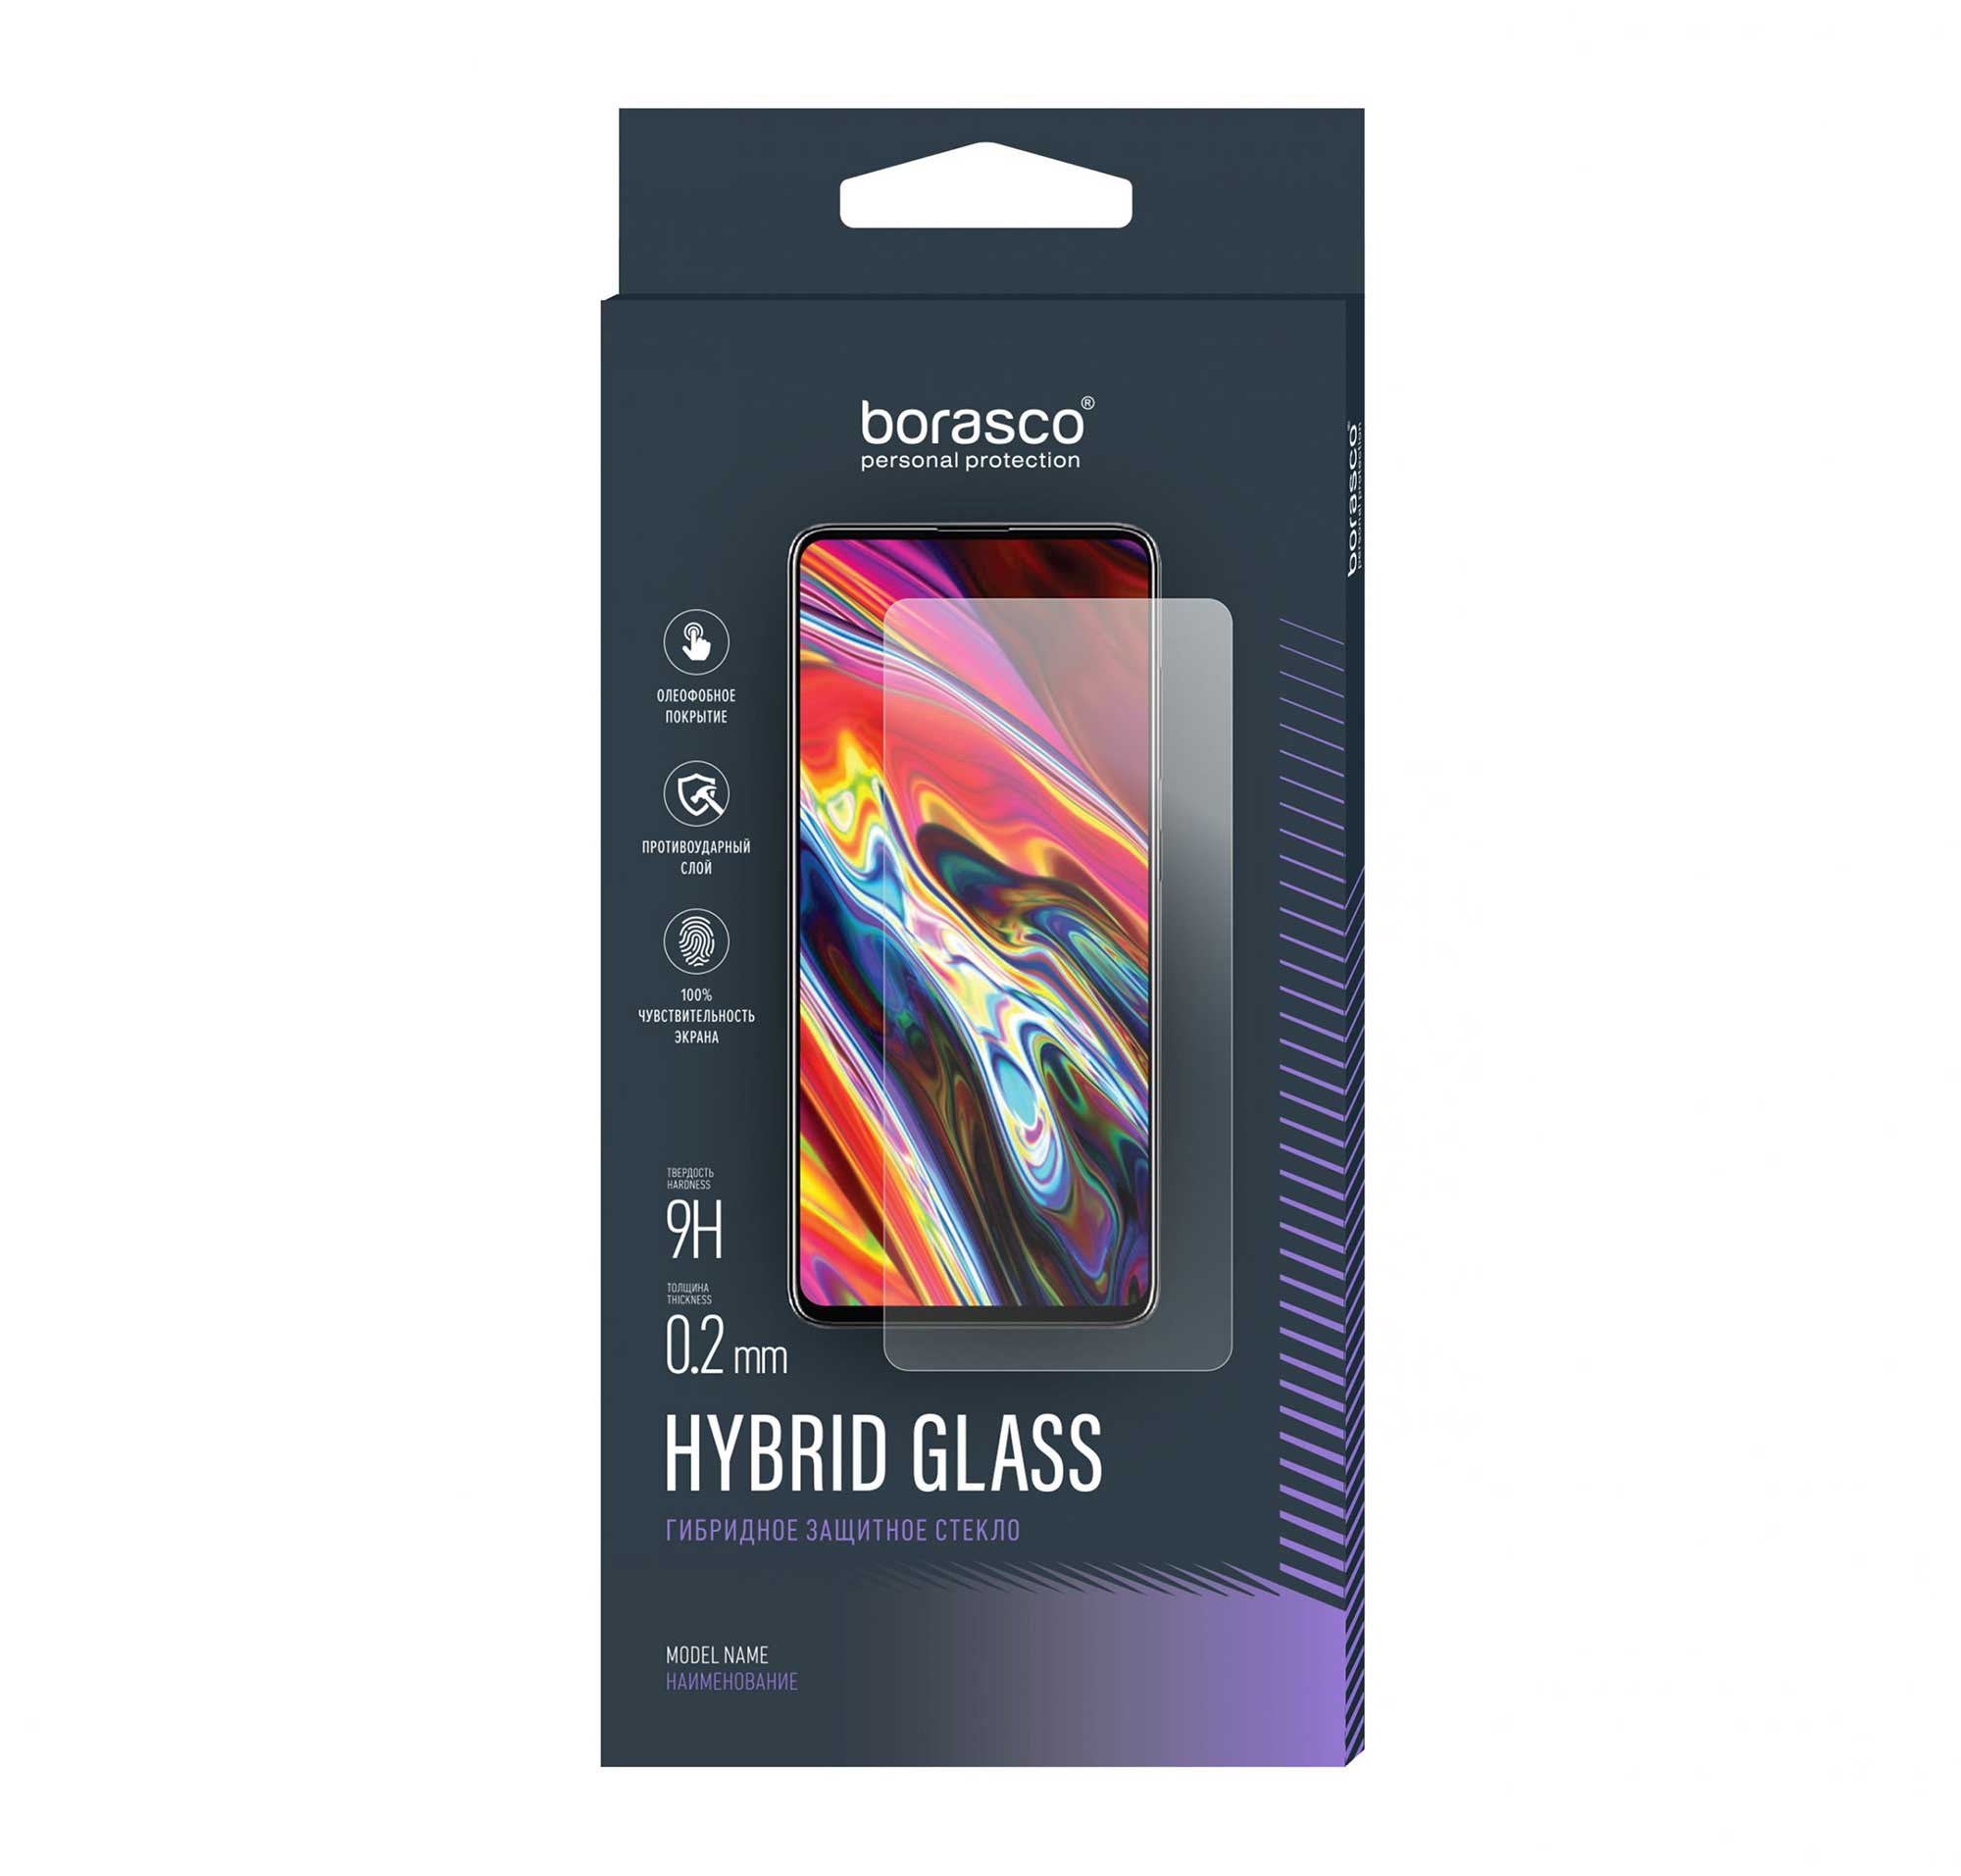 Защитное стекло BoraSCO Hybrid Glass для Sony Xperia XZ3 защитное стекло для sony xperia z3 d6603 2 5d